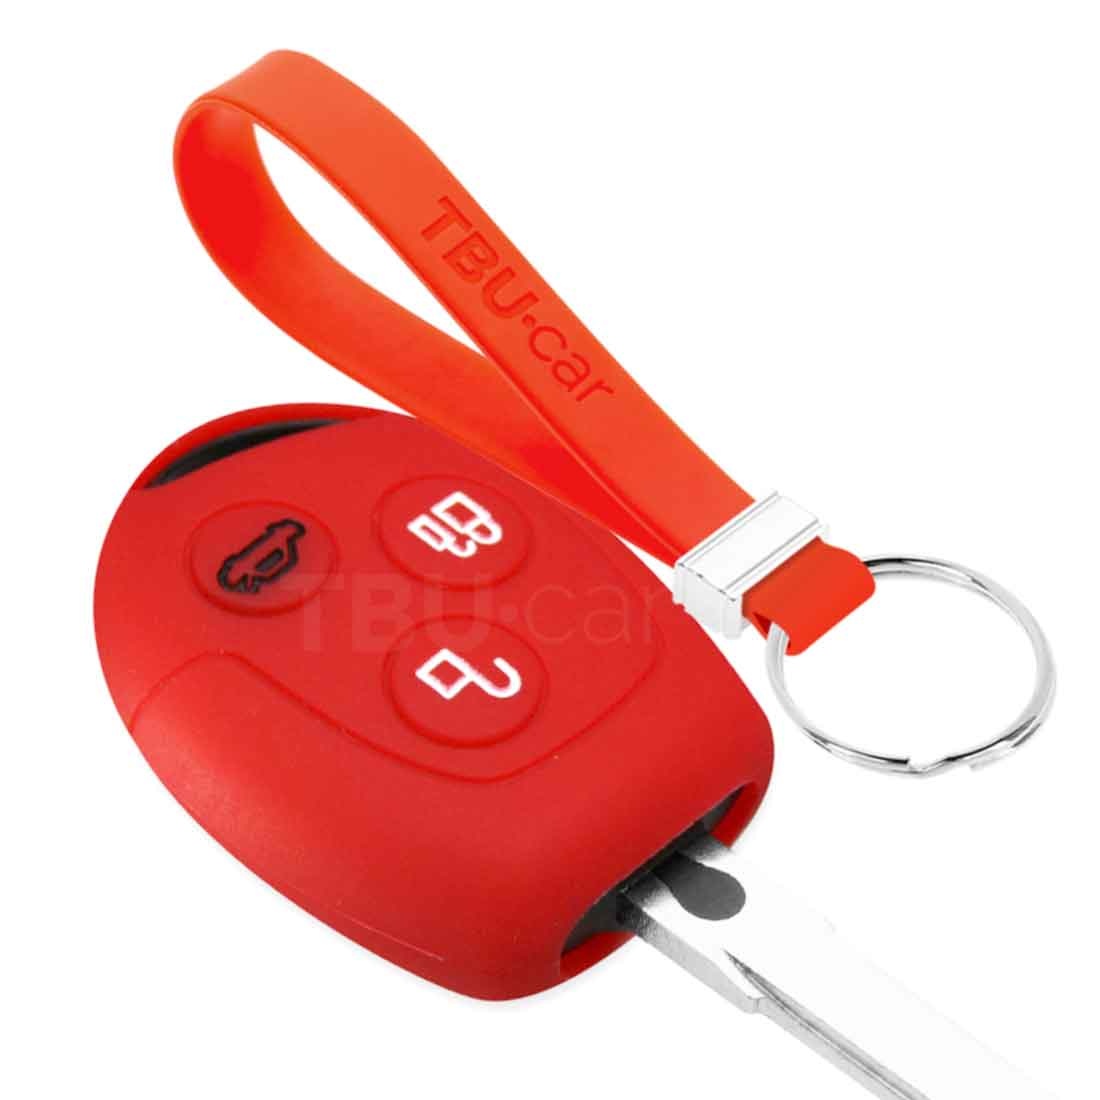 TBU car TBU car Autoschlüssel Hülle kompatibel mit Ford 3 Tasten - Schutzhülle aus Silikon - Auto Schlüsselhülle Cover in Rot